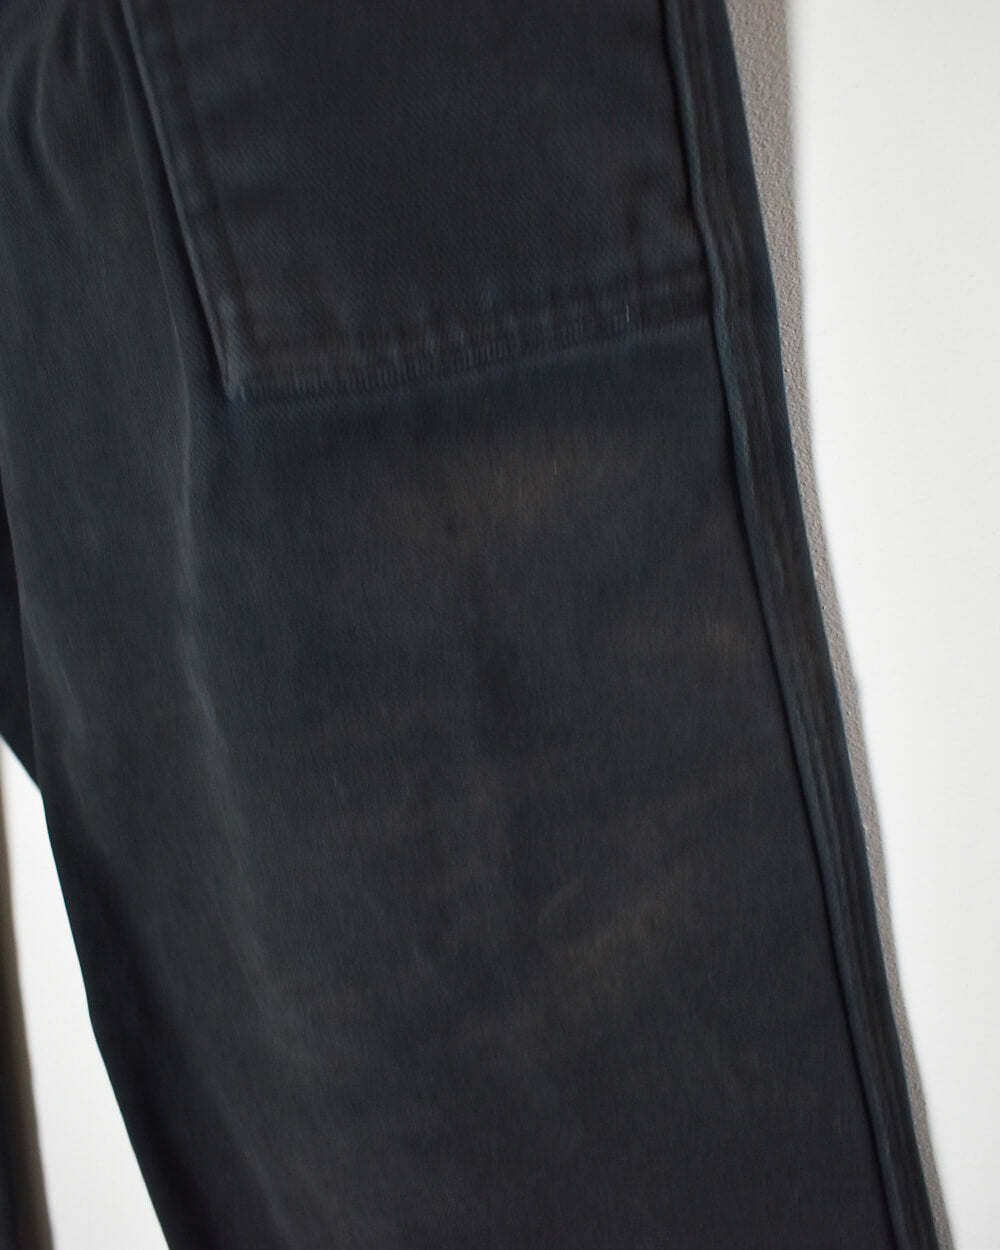 Black Dickies Heavyweight Carpenter Jeans - W32 L30